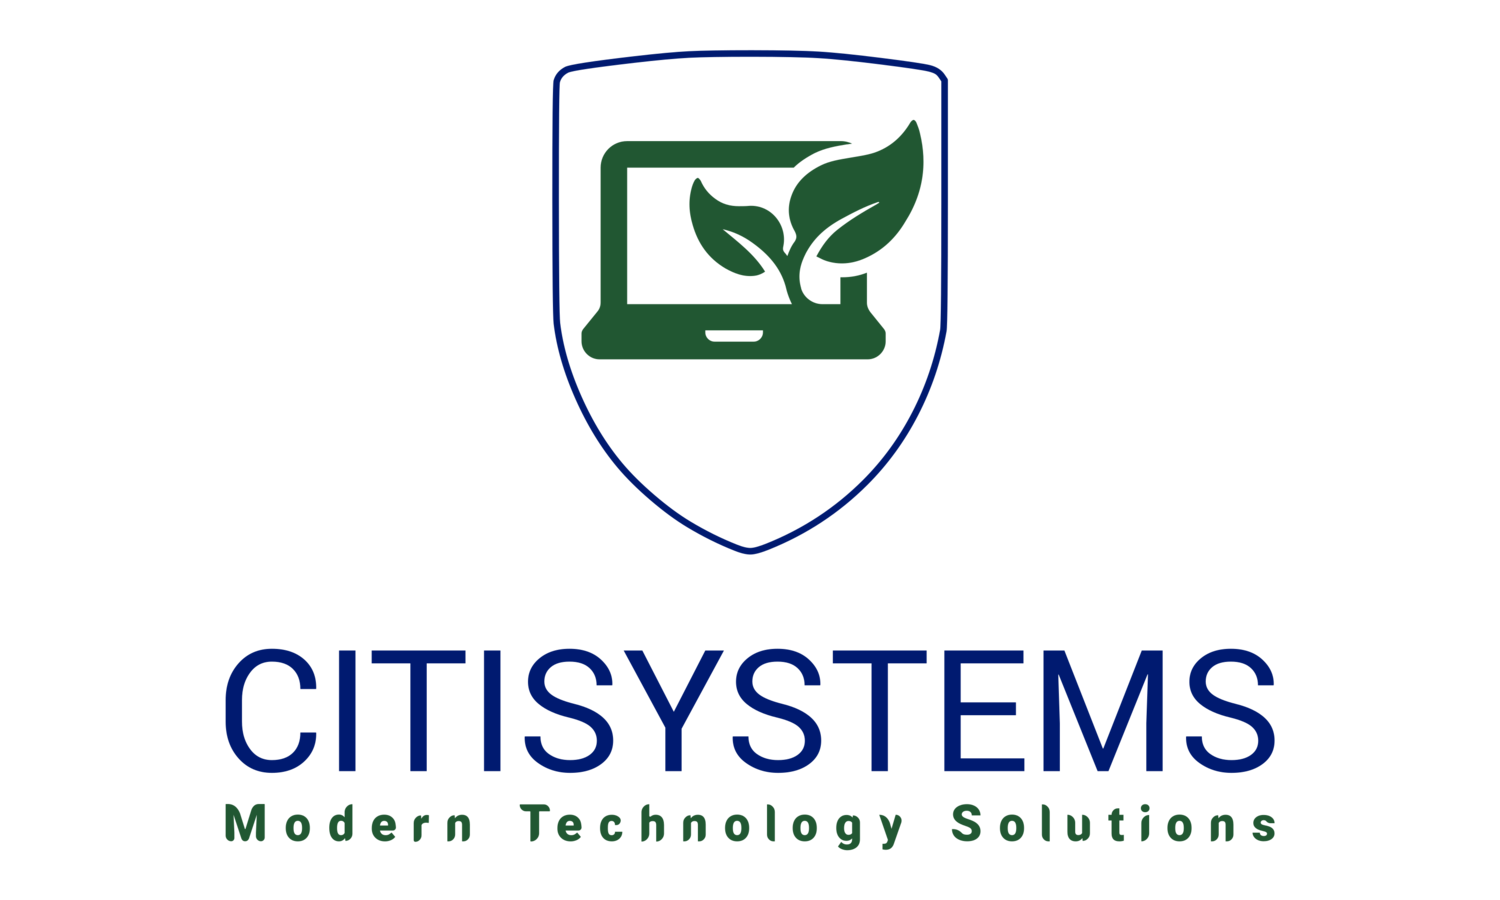 Citisystems - Your Modern Technology Partner